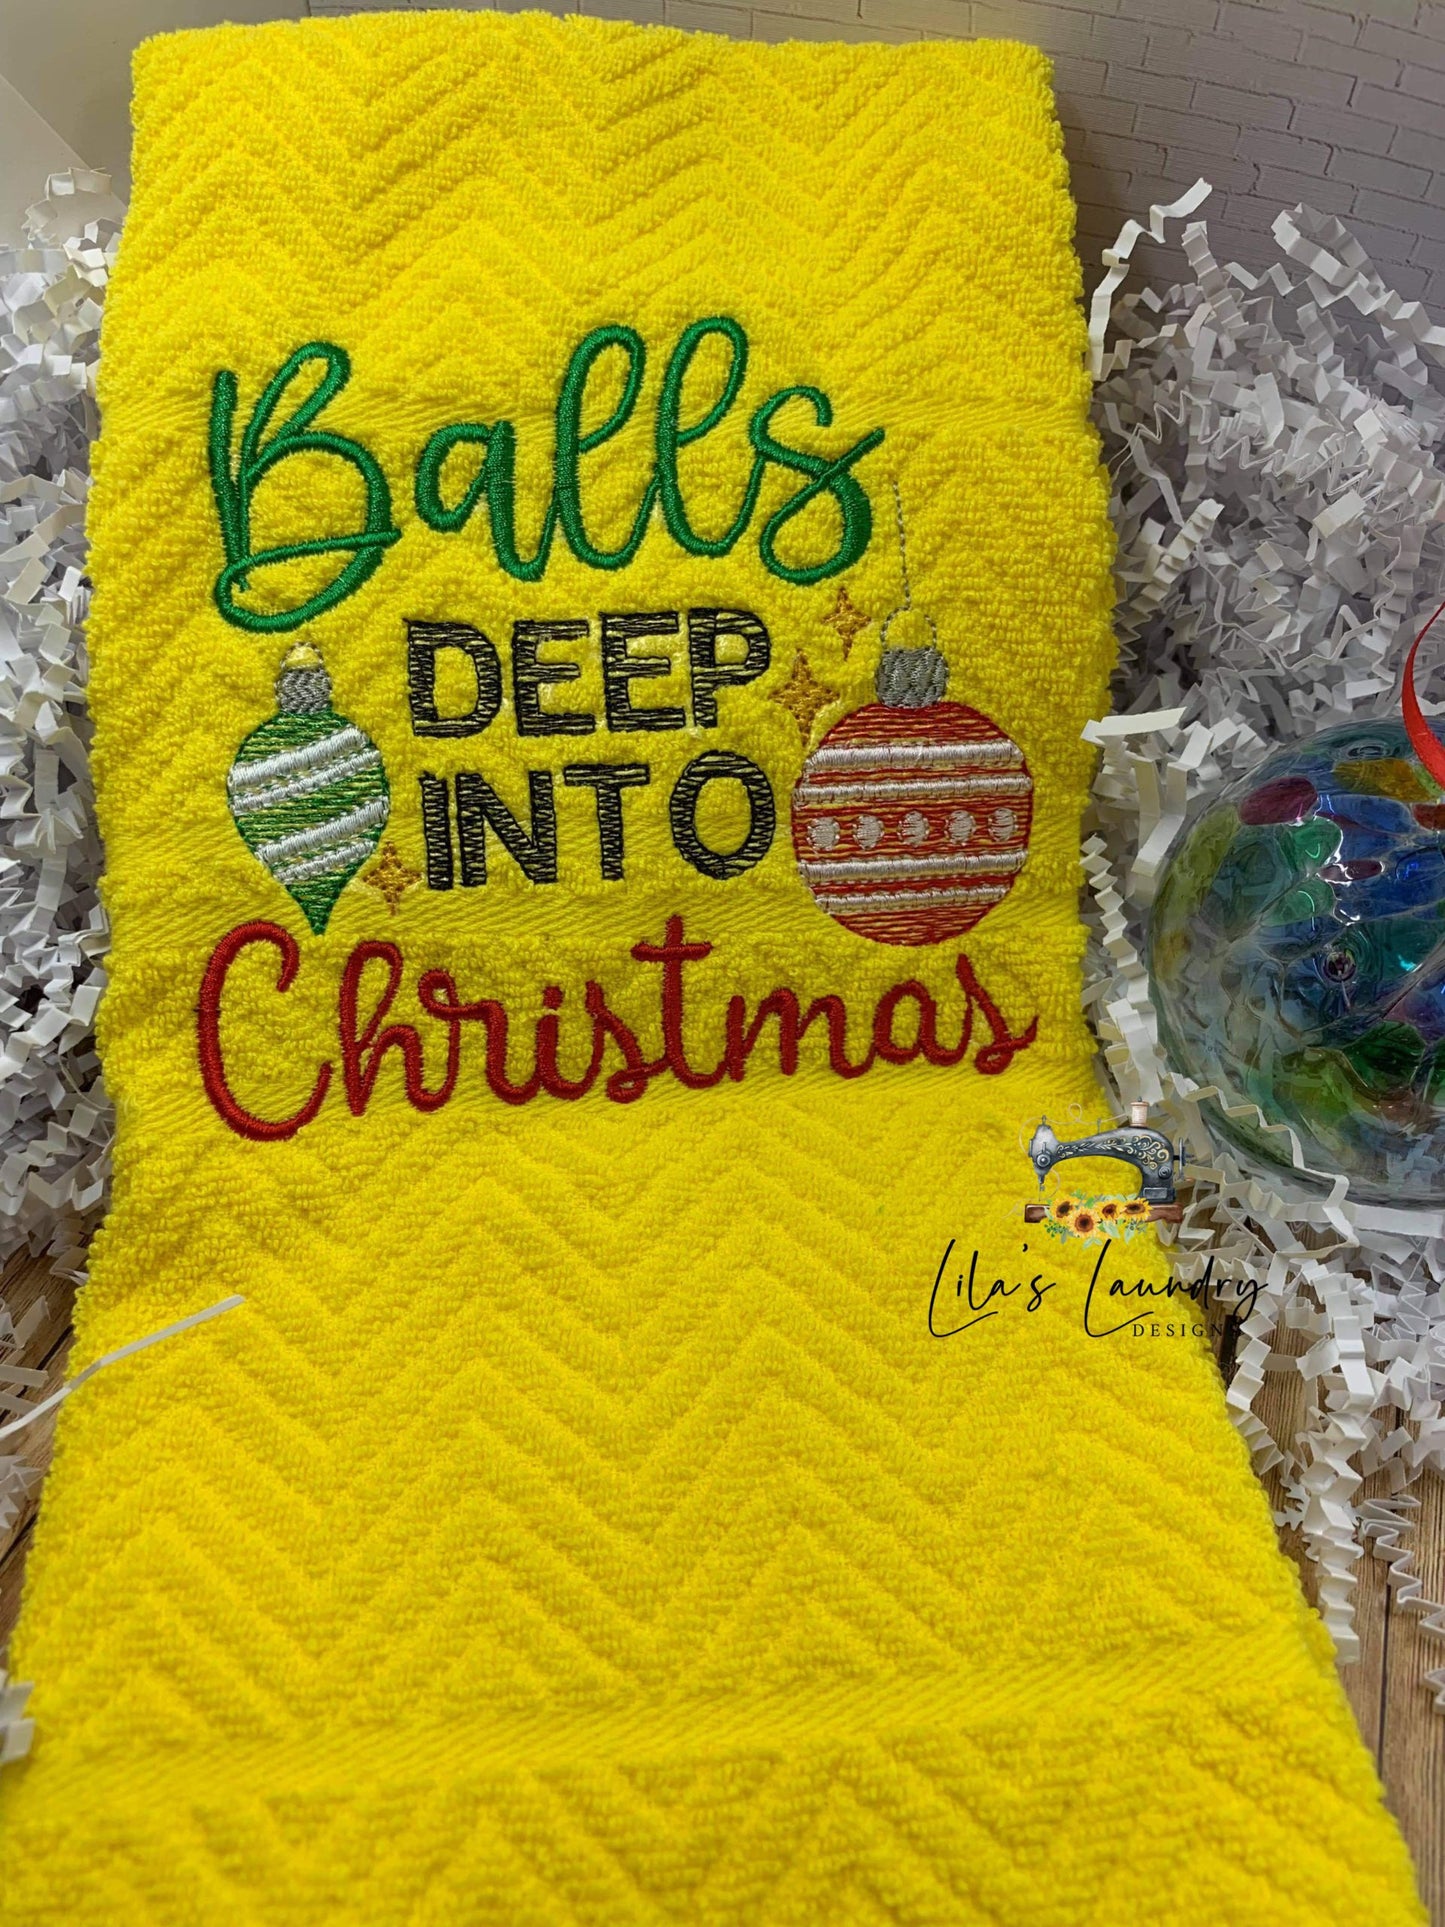 Balls Deep Into Christmas - 4 sizes- Digital Embroidery Design